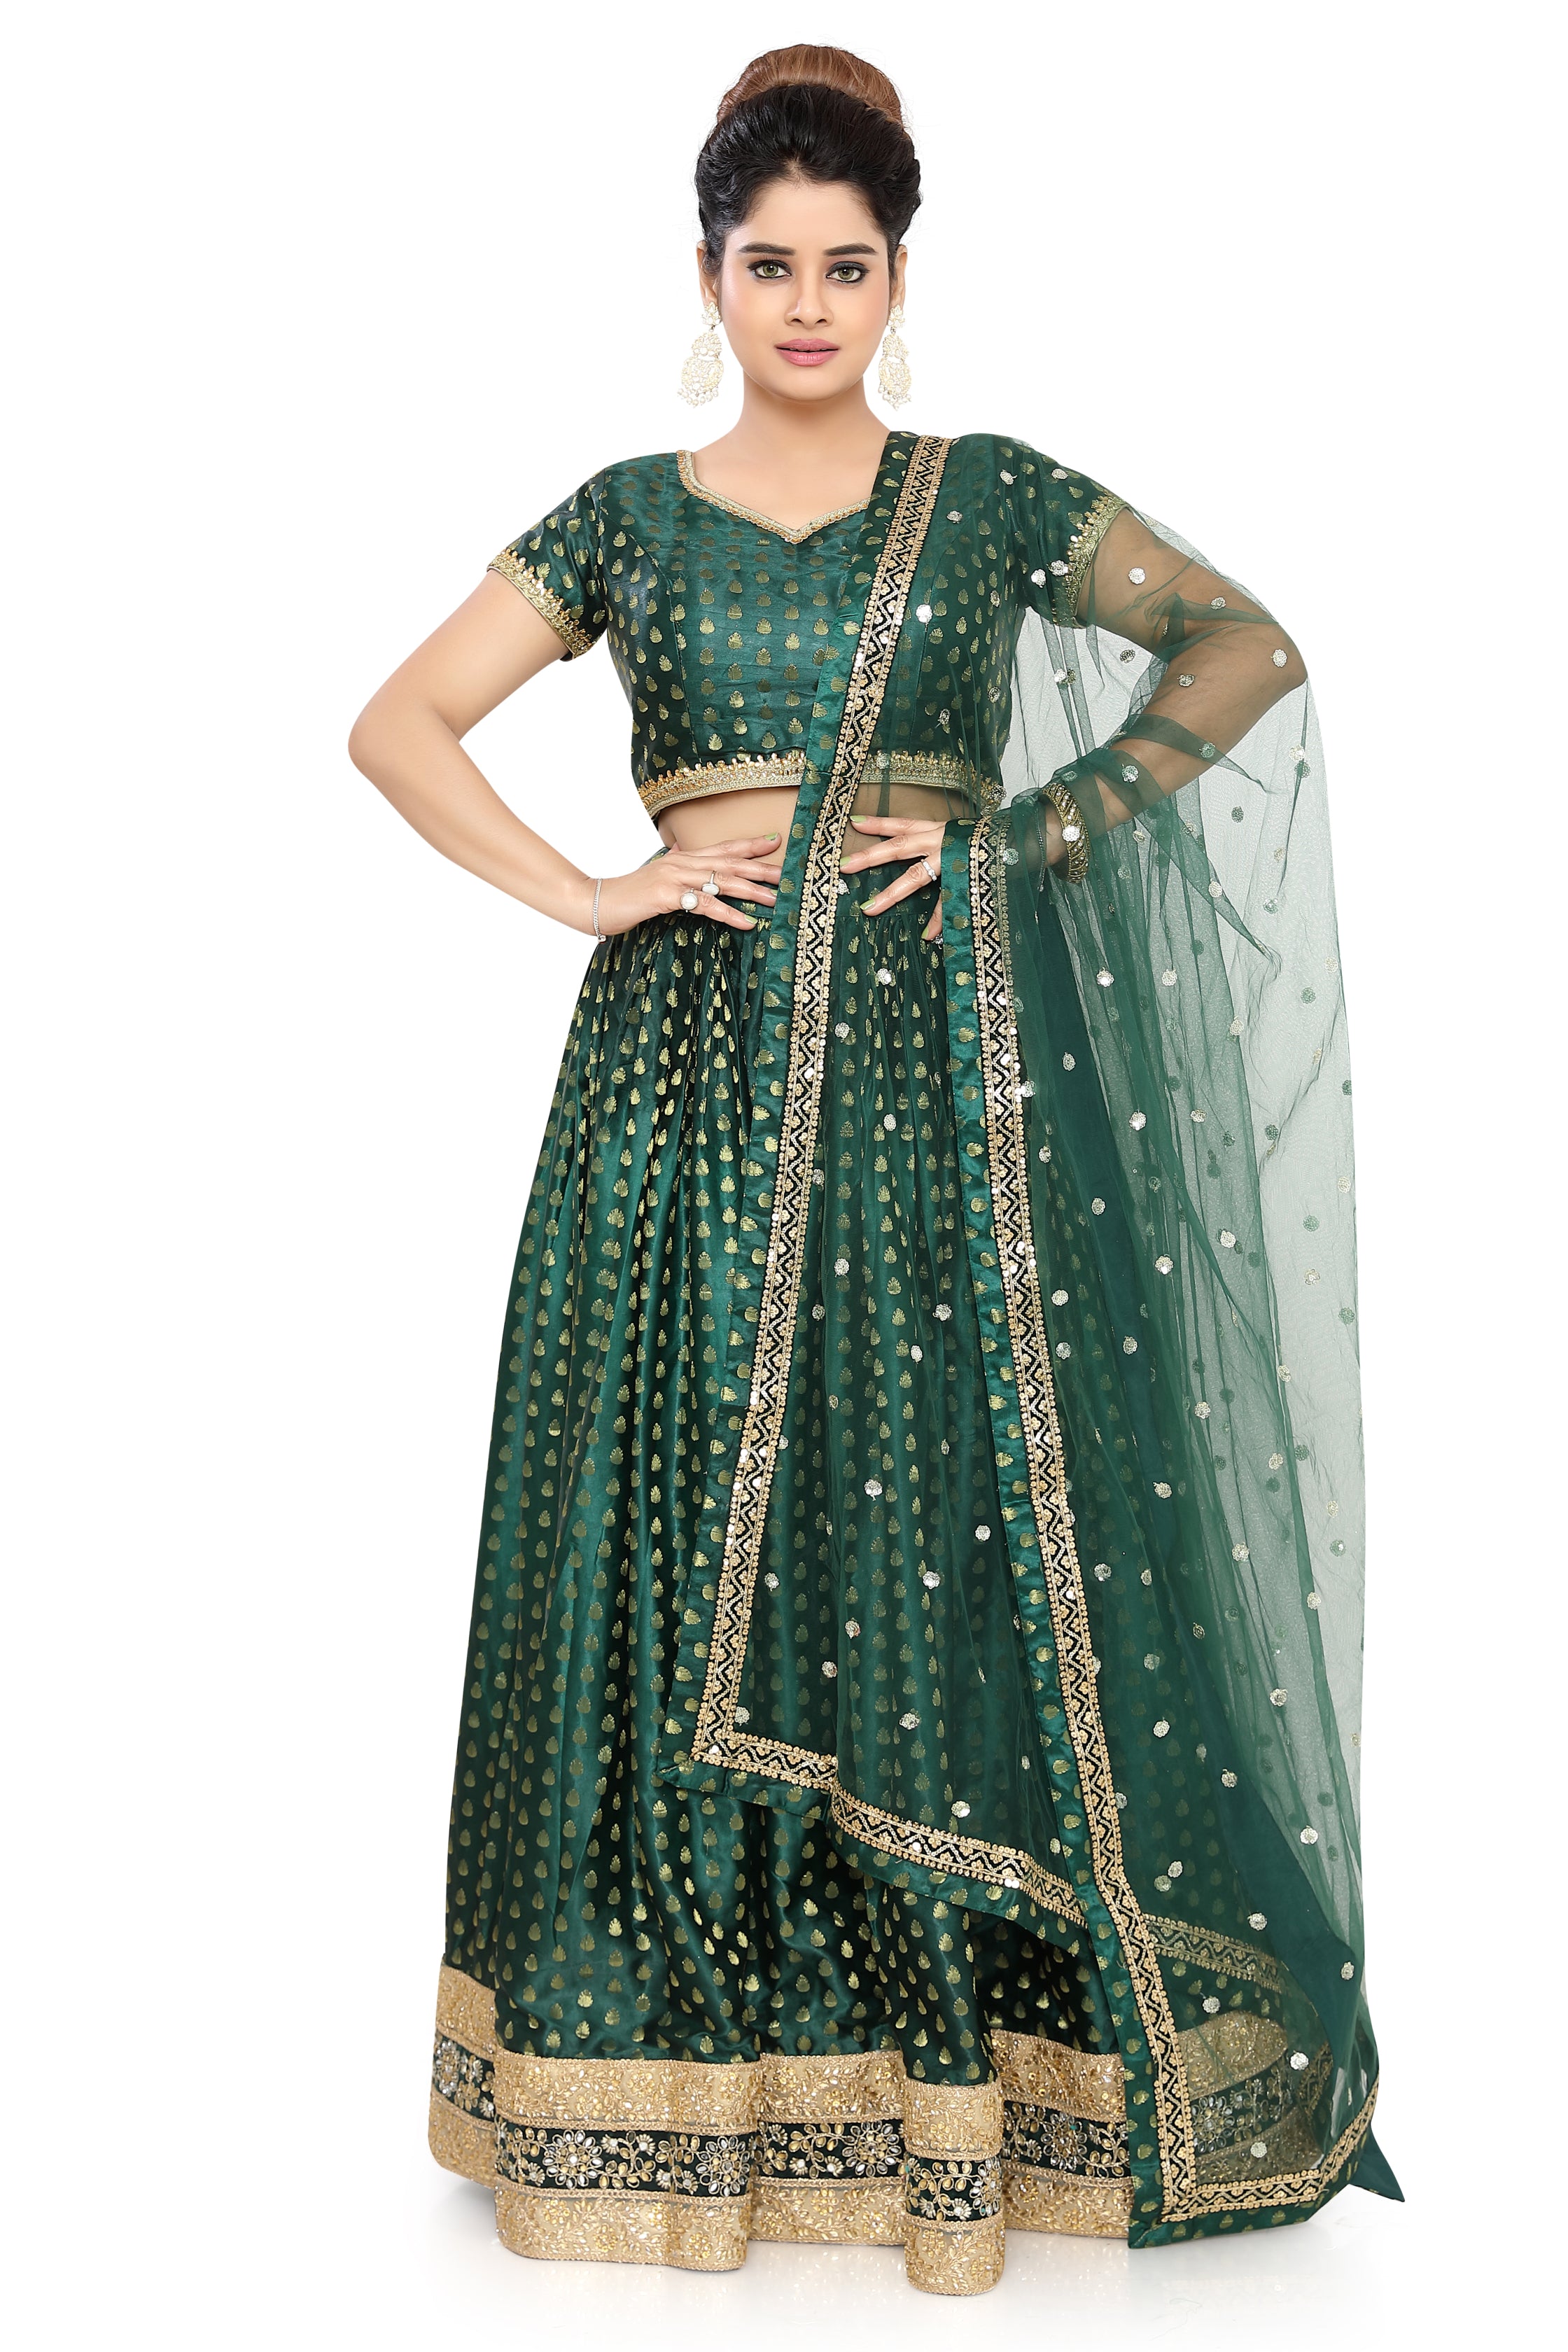 Green Silk Lehenga Choli - Premium Partywear Lehenga from Dulhan Exclusives - Just $195! Shop now at Dulhan Exclusives